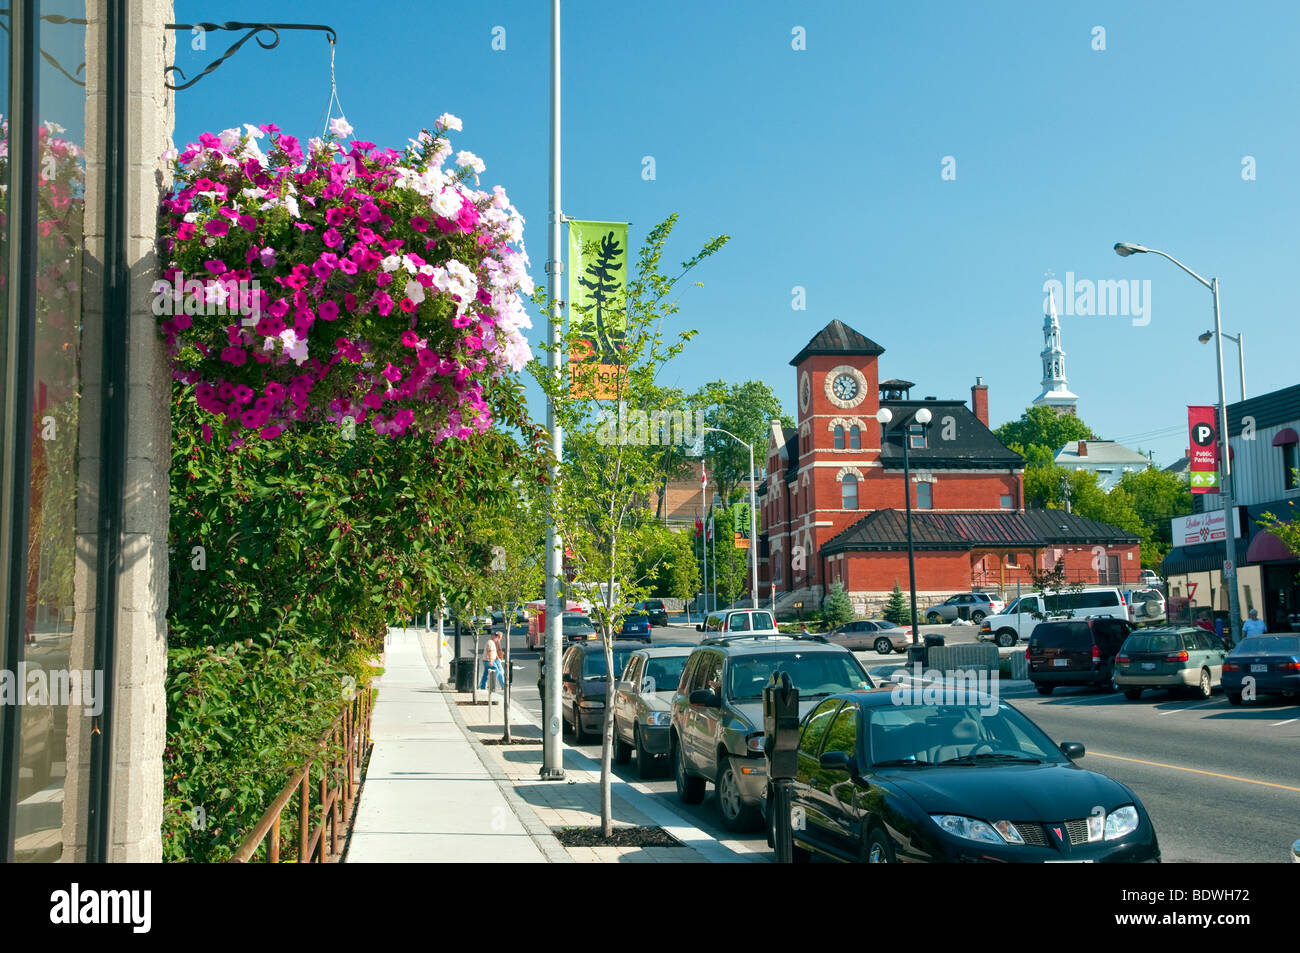 Kenora, Ontario main street with flowers, lamp posts and traffic. Stock Photo